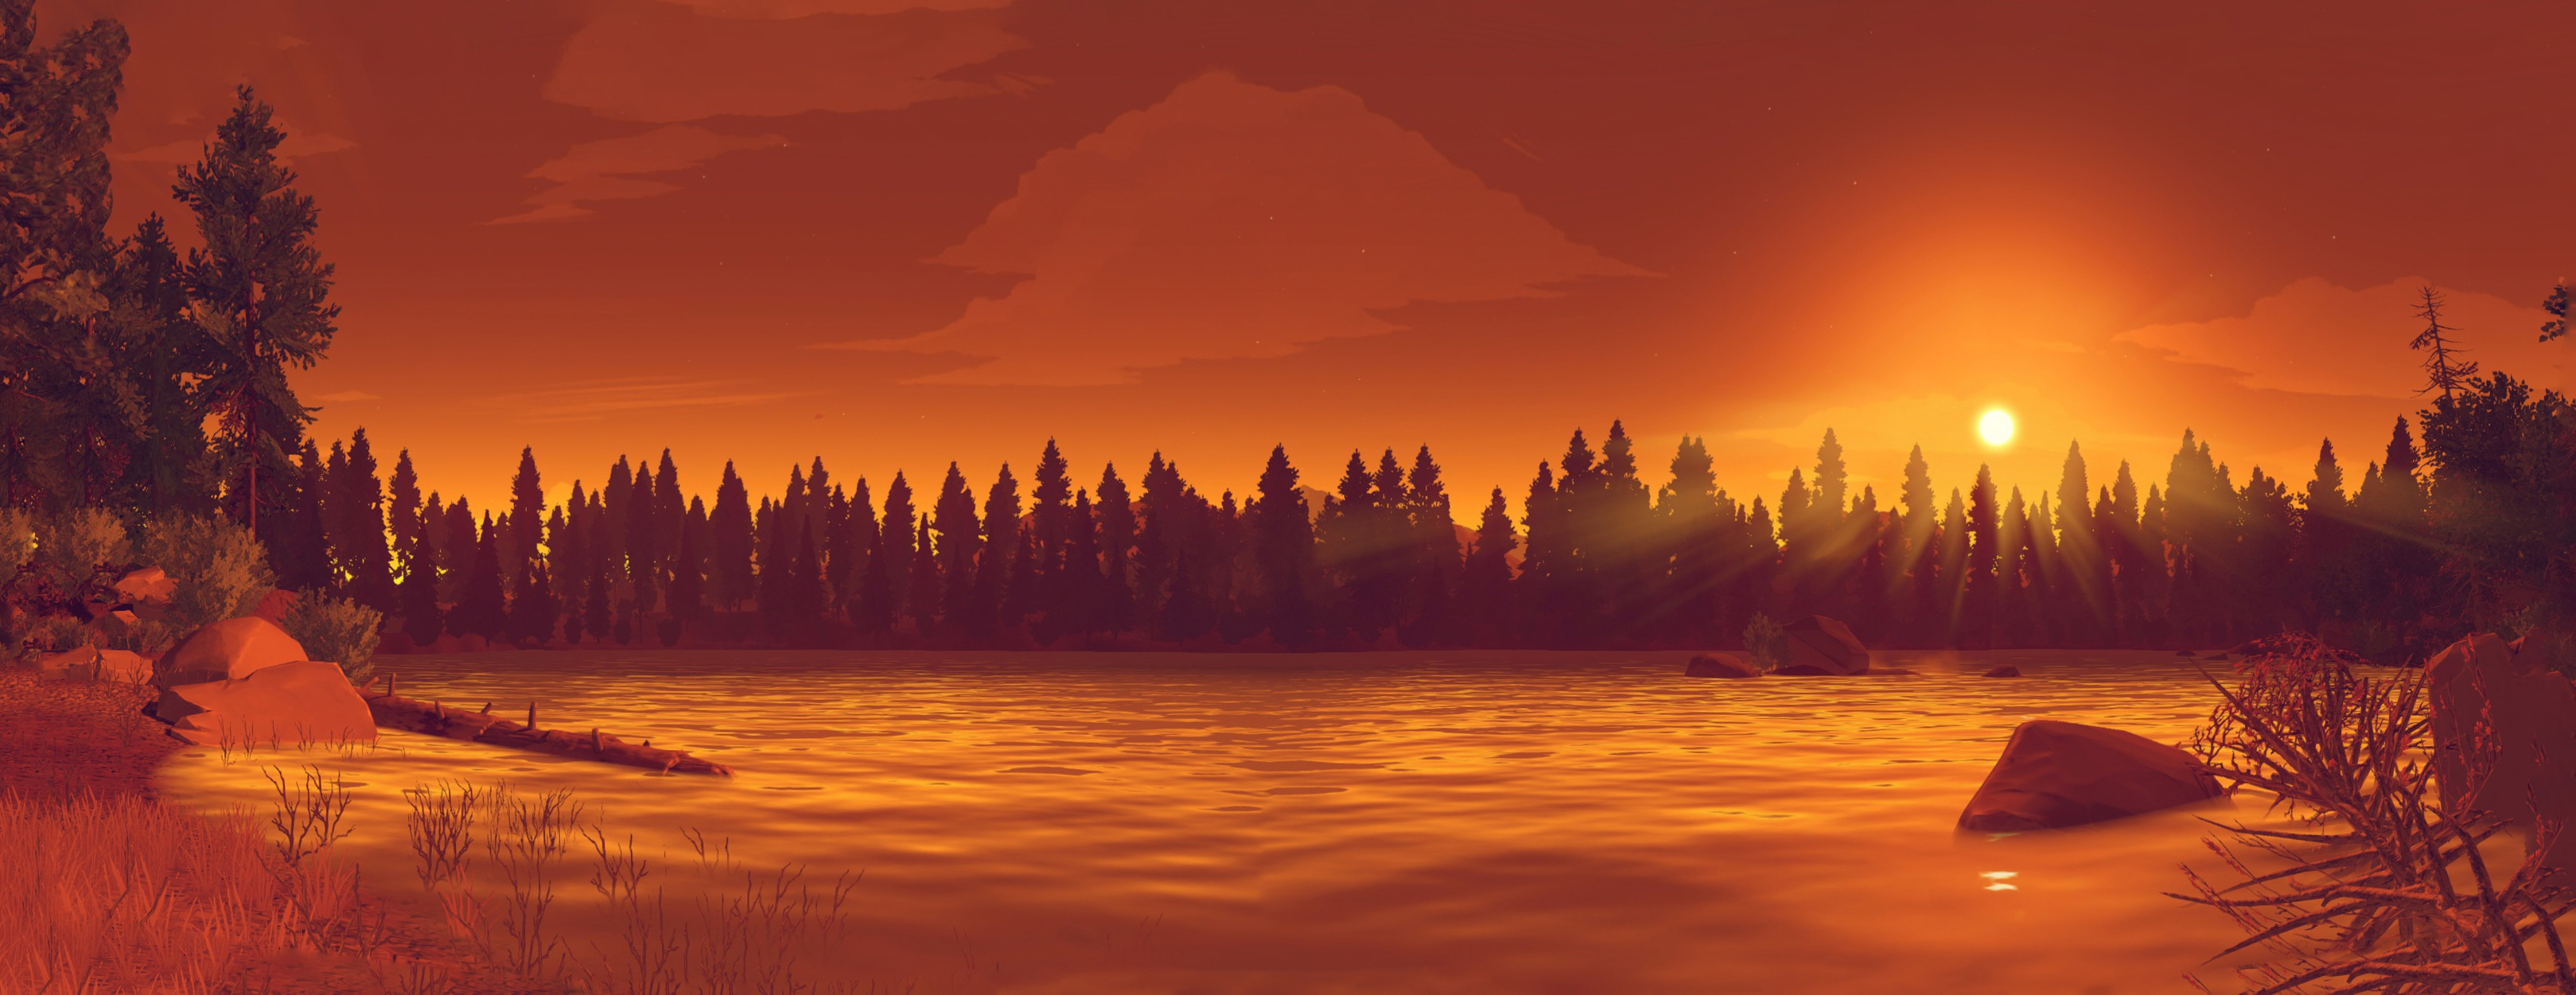 firewatch fondo de pantalla hd,cielo,naturaleza,cielo rojo en la mañana,paisaje natural,amanecer